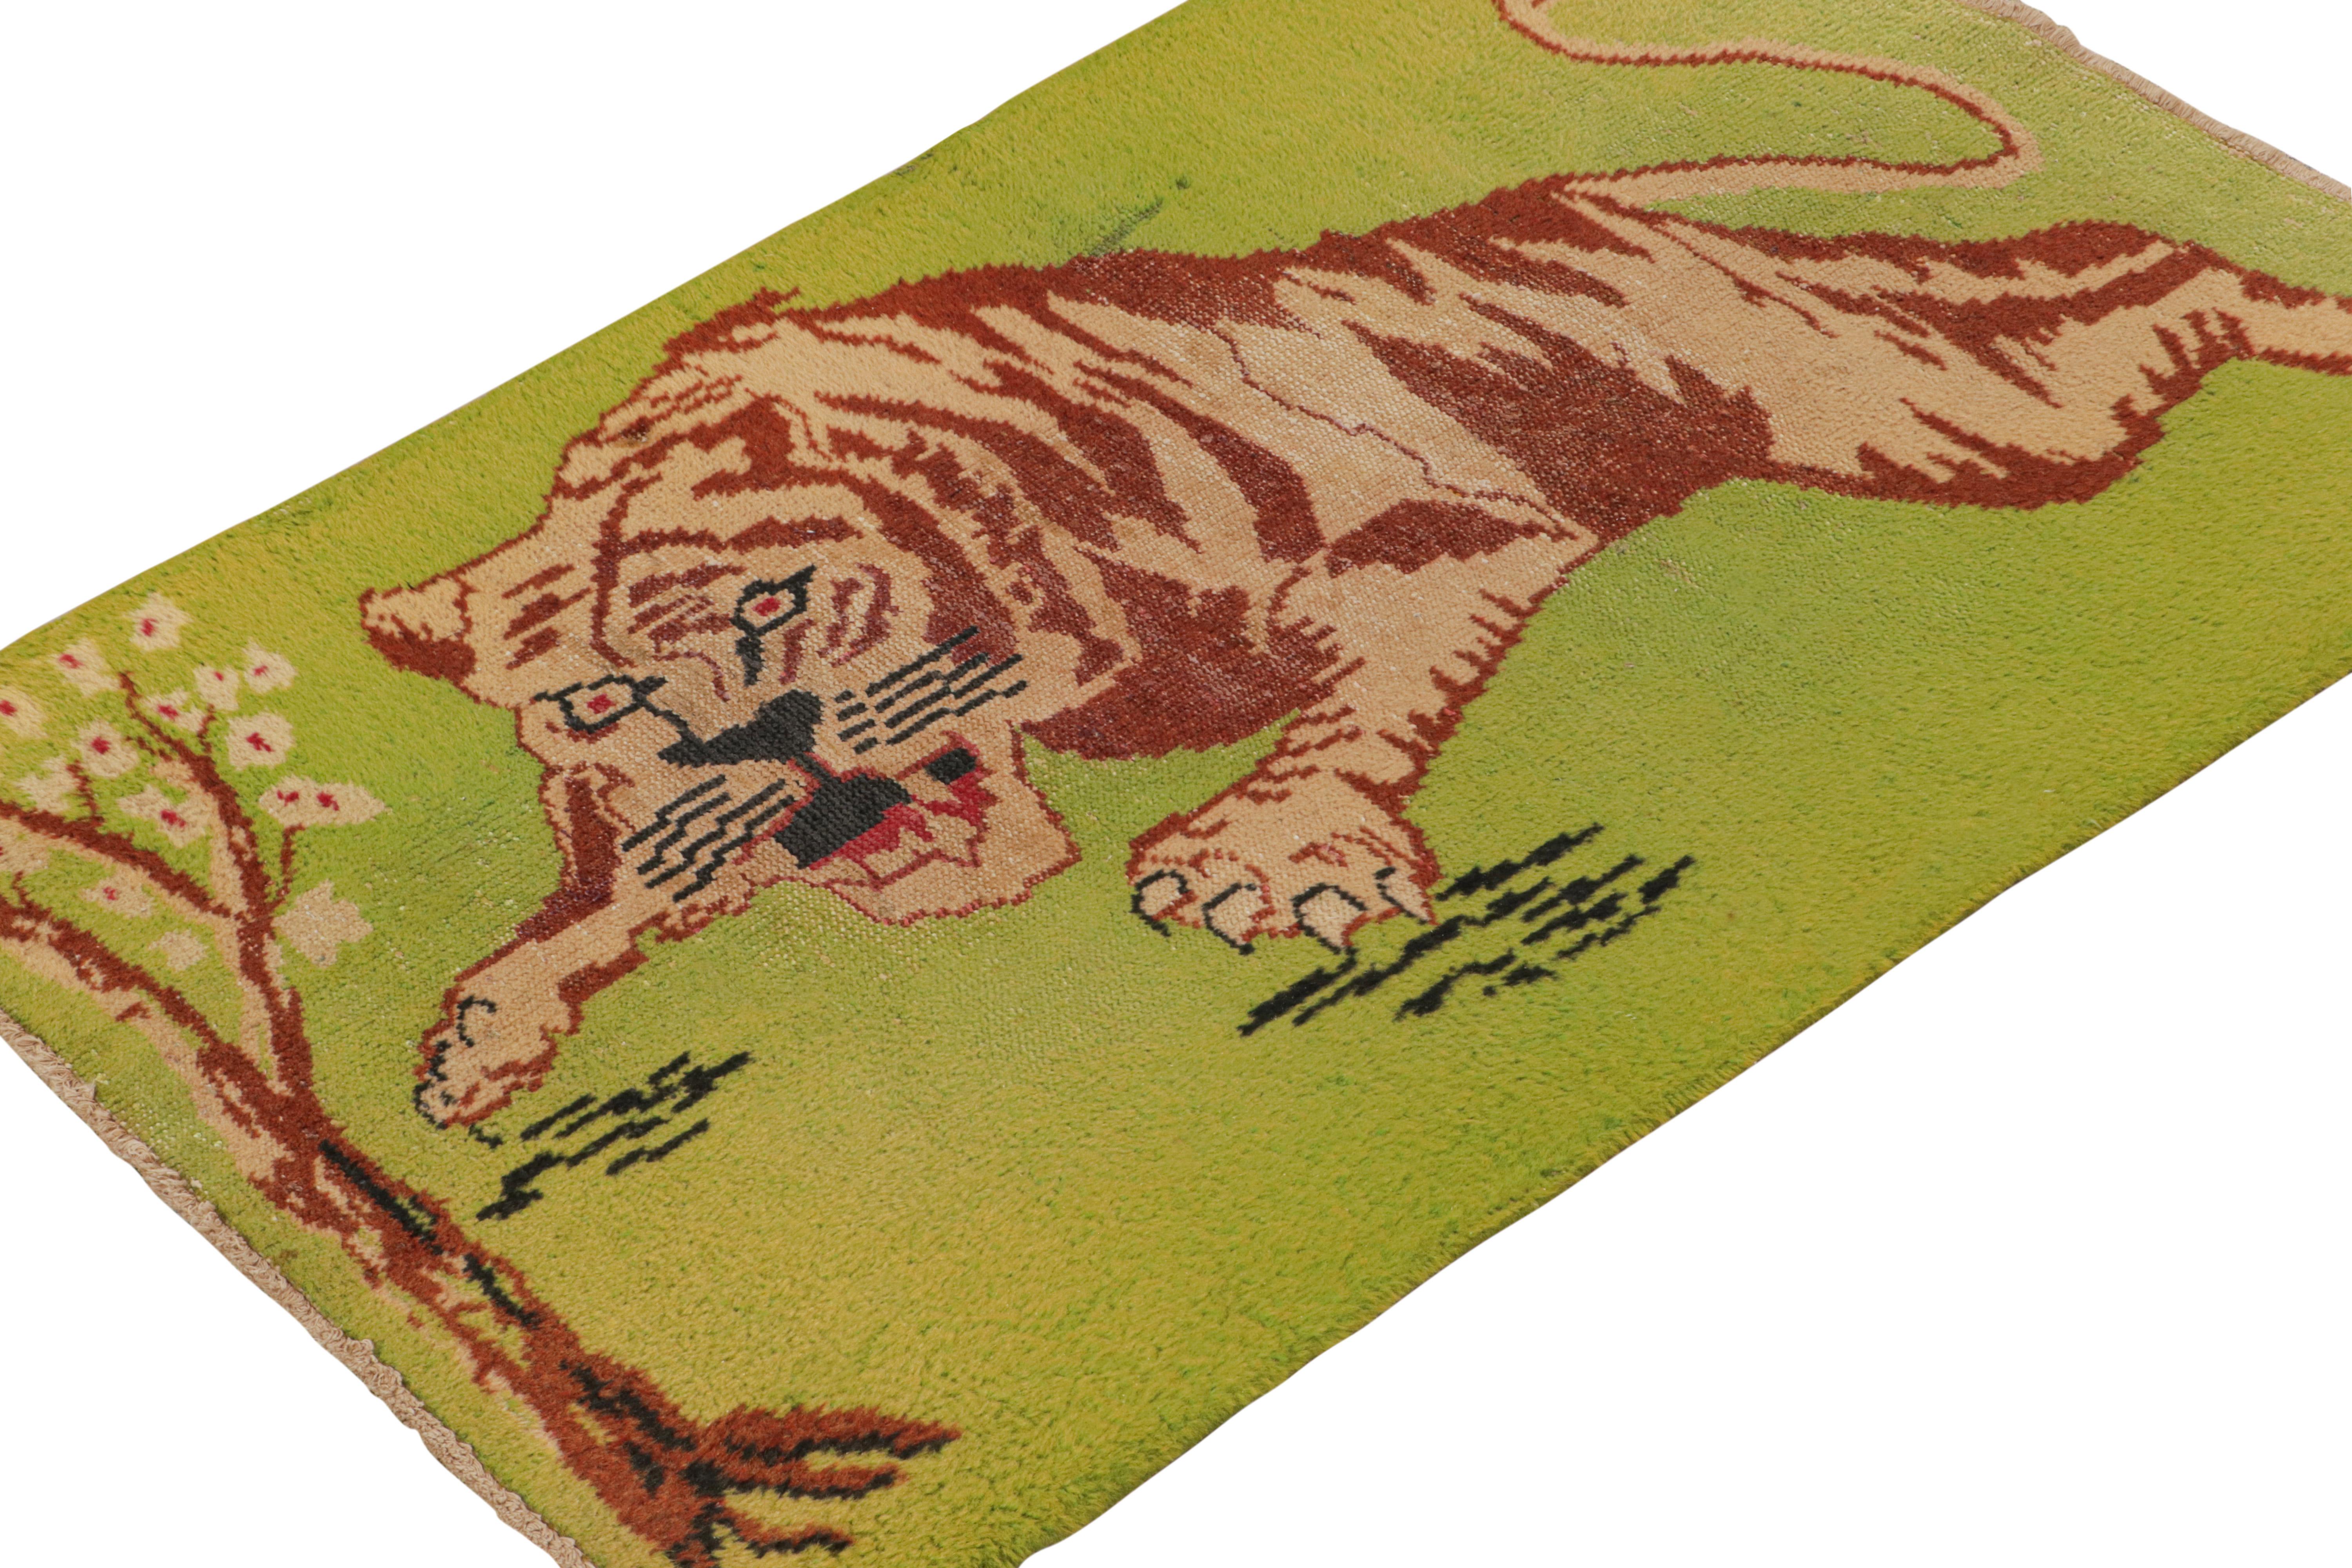 Turkish Vintage Zeki Müren Rug in Green with Beige-Brown Tiger Pictorial by Rug & Kilim For Sale